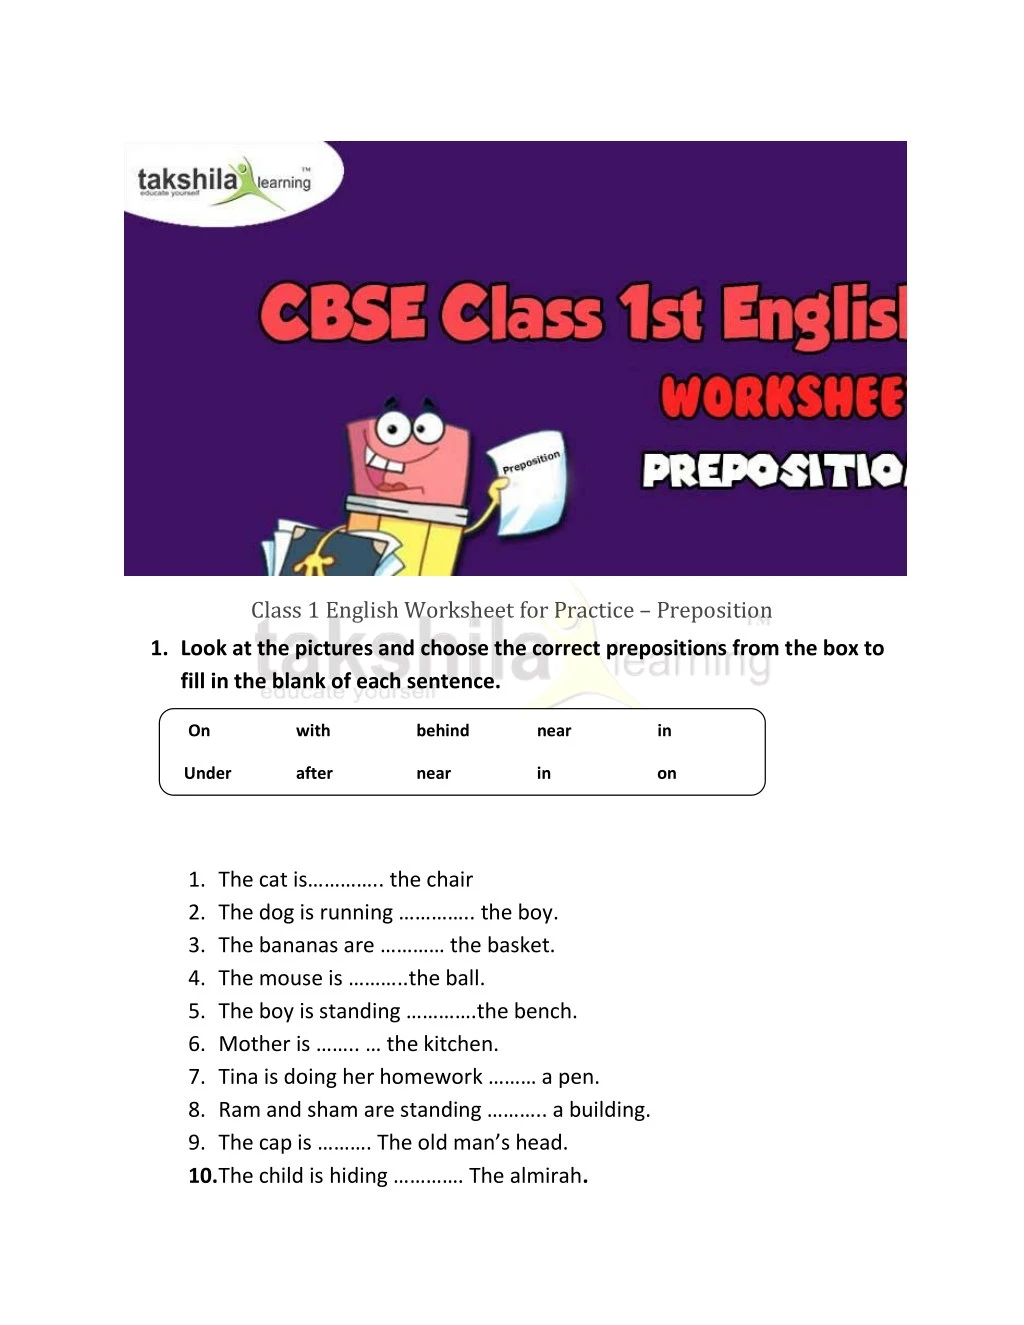 ppt-class-1-english-worksheet-for-practice-preposition-takshilalearning-powerpoint